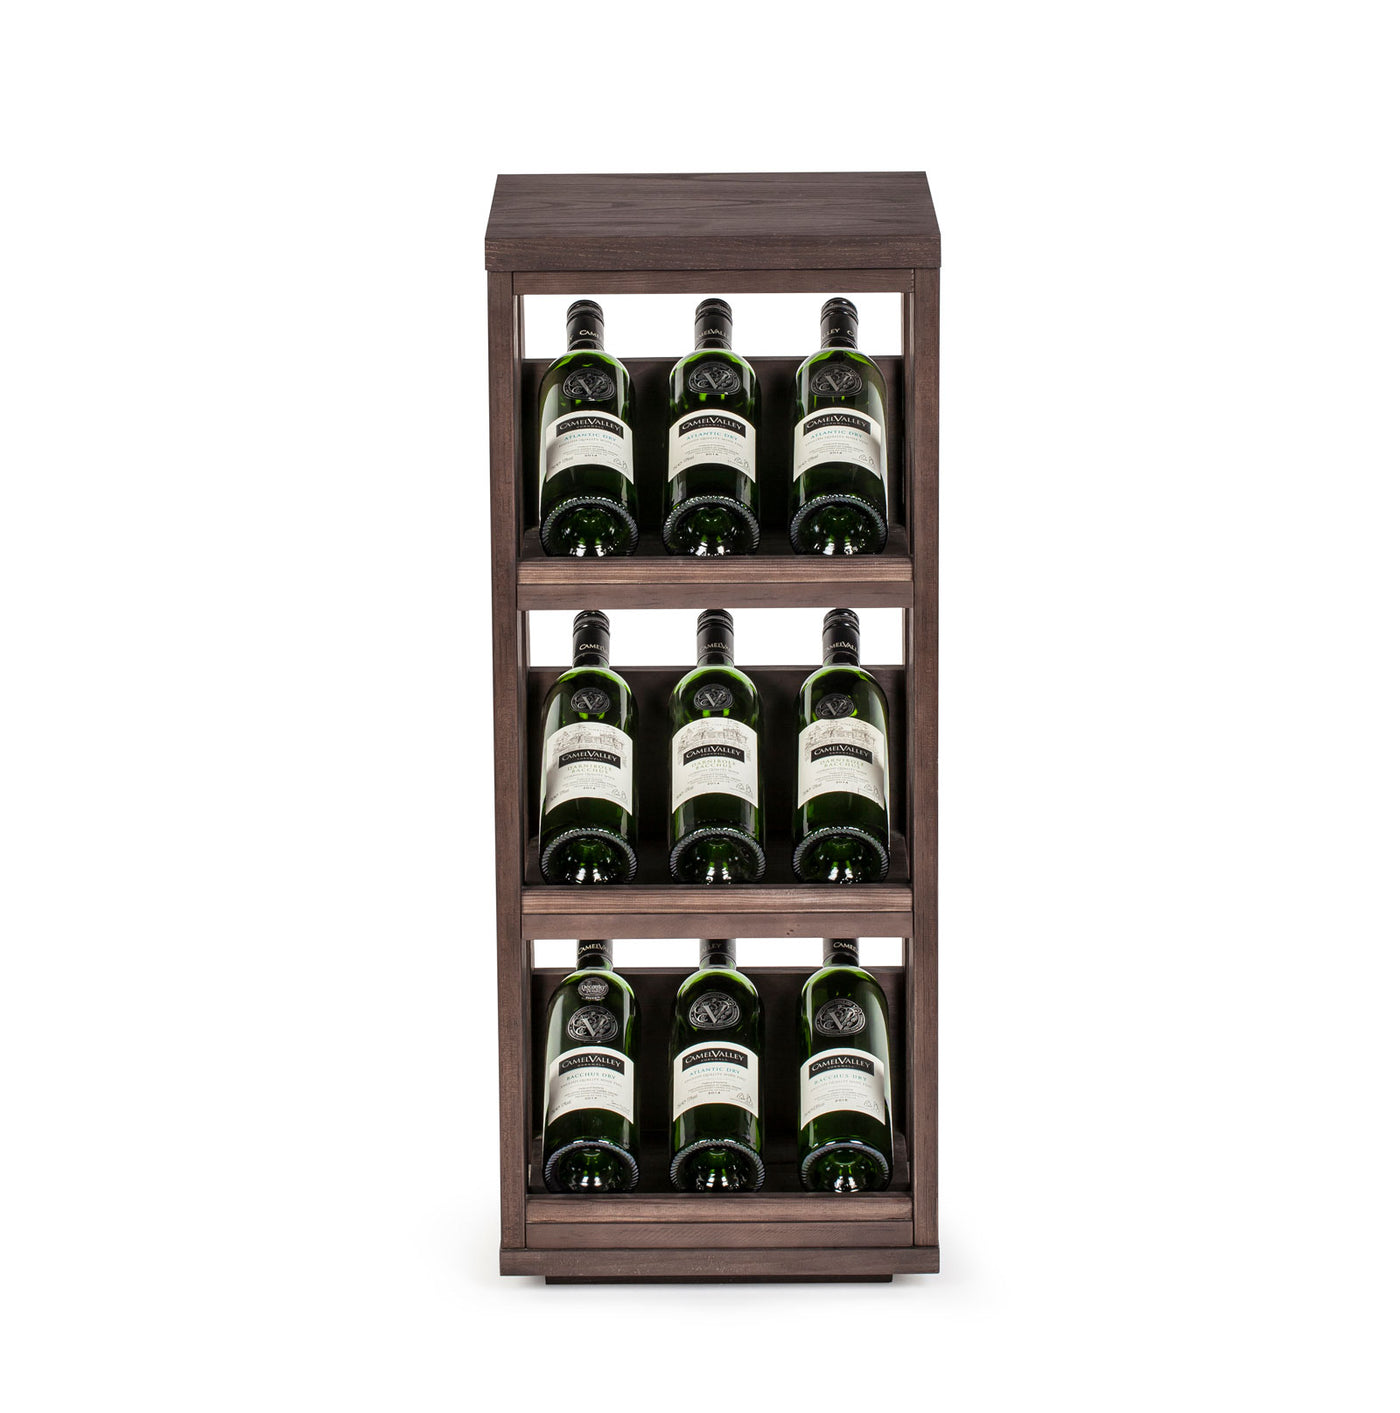 Avino Base Unit - 9 Bottle Angled Display Modular Wine Rack